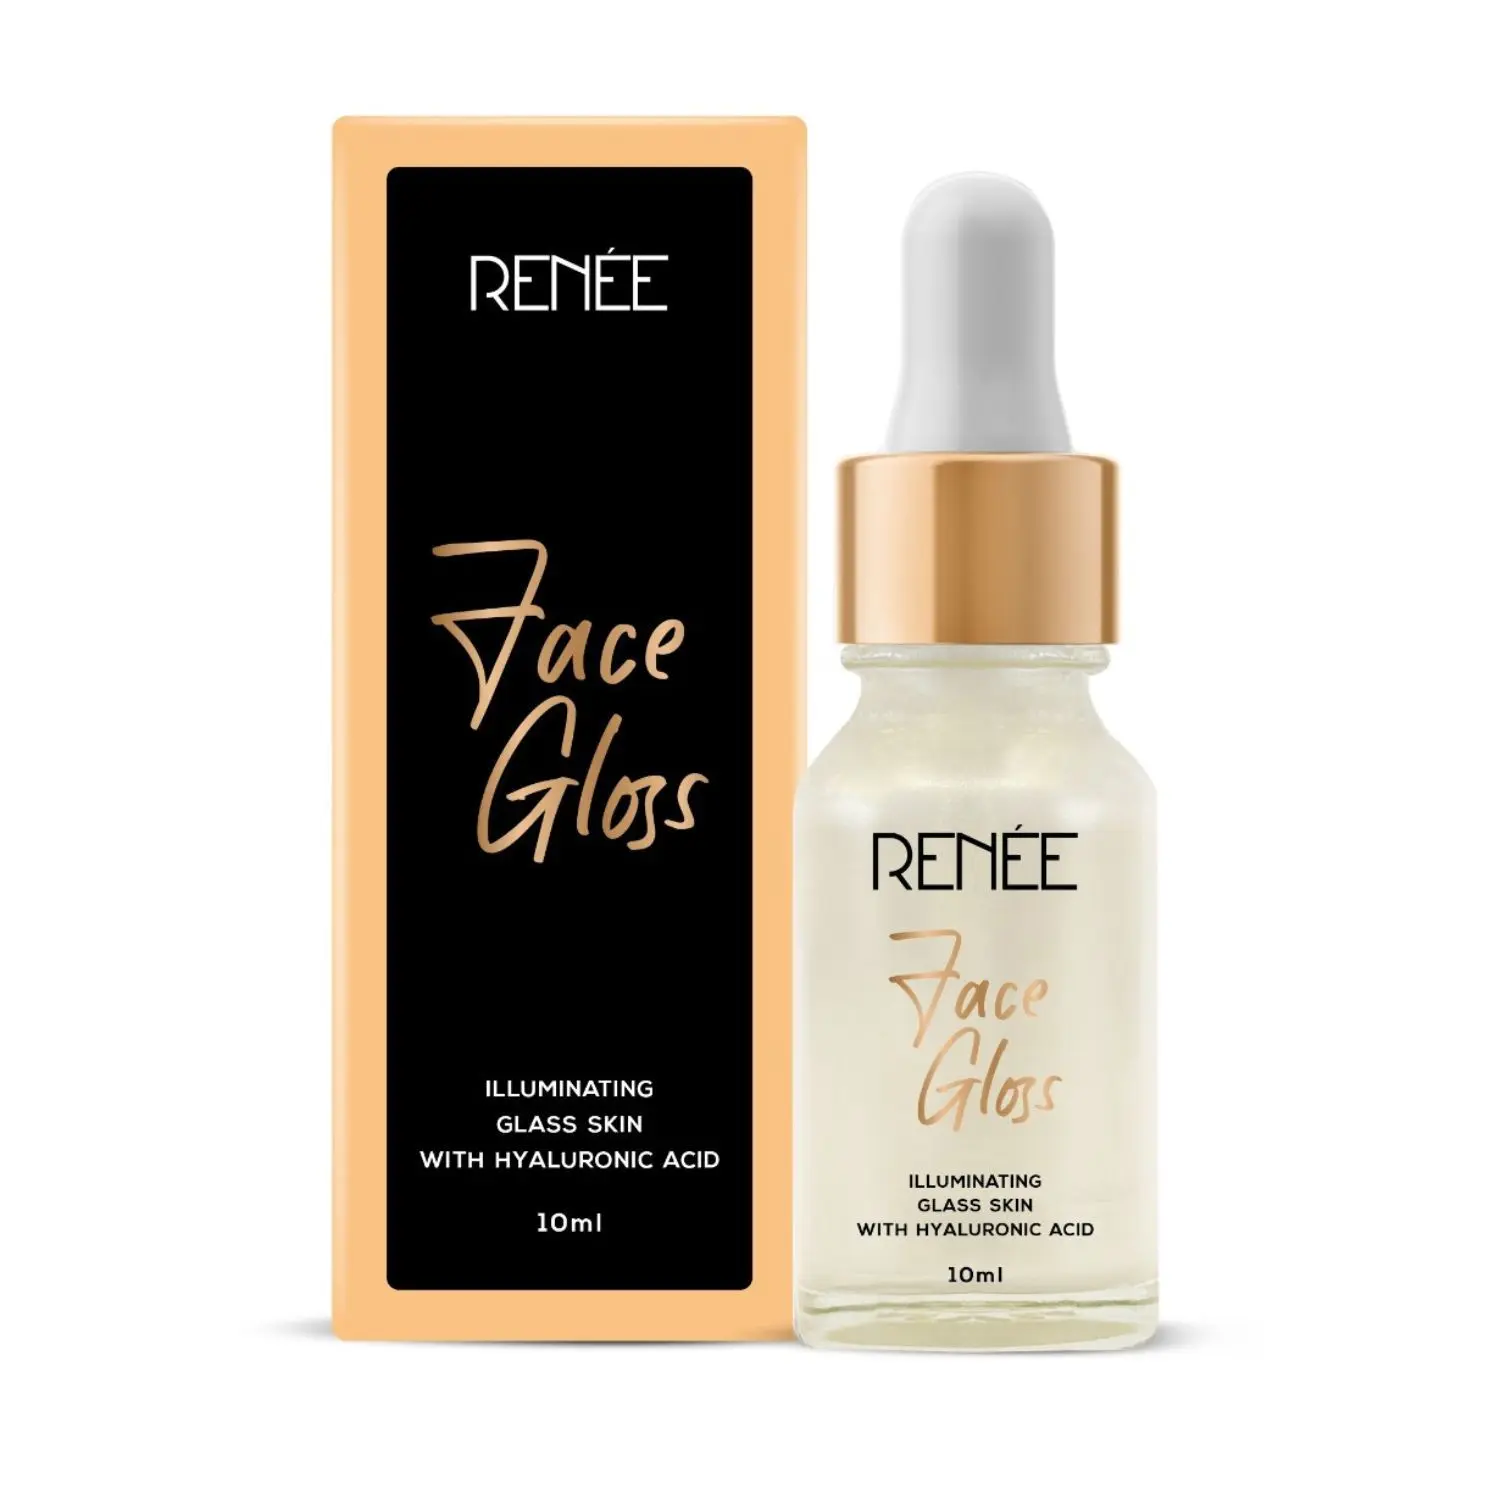 RENEE Face Gloss Illuminating Face Serum, GLASS SKIN WITH HYALURONIC ACID 10ml